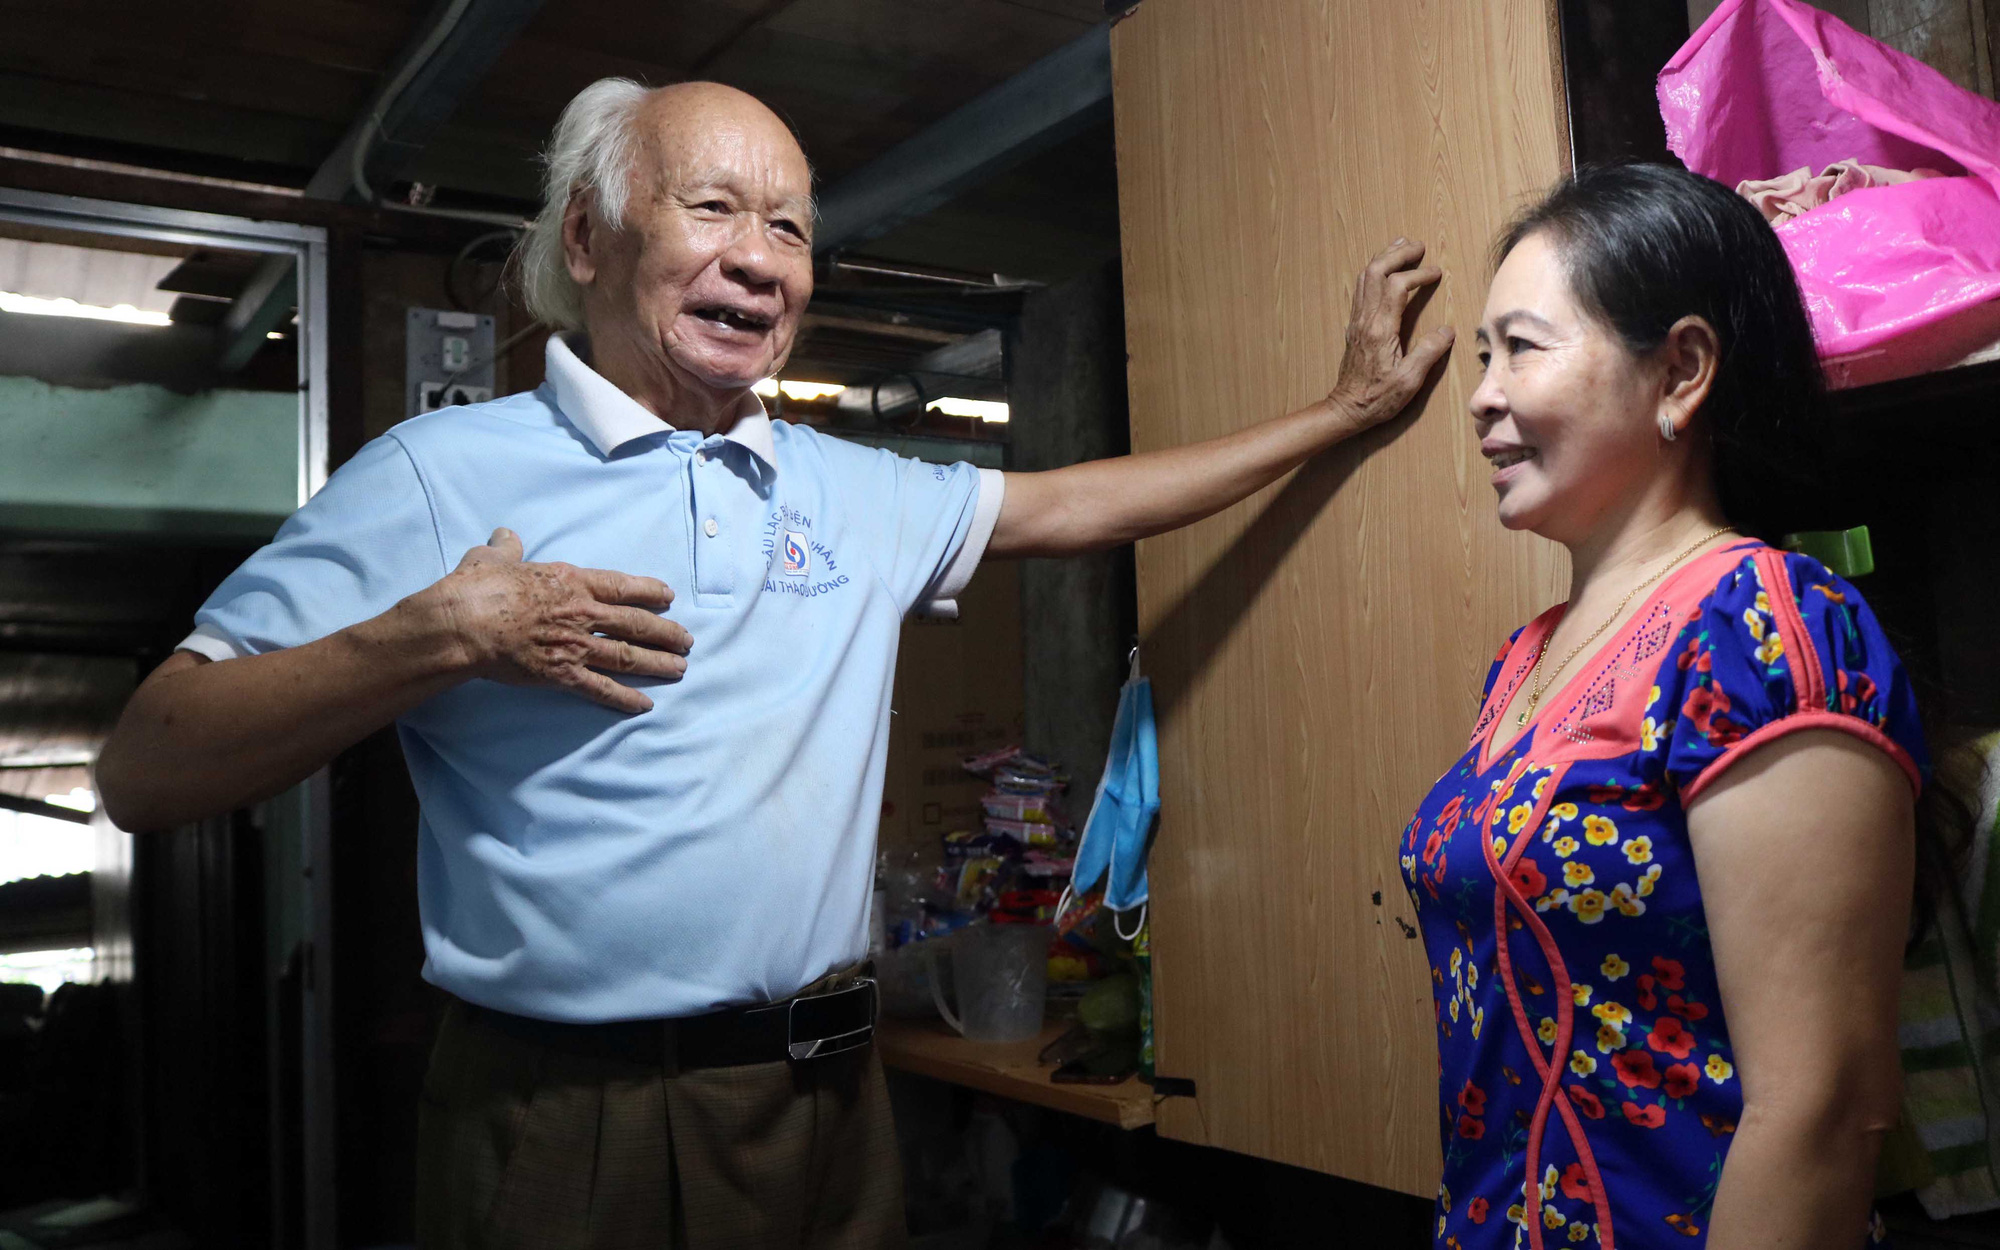 In Saigon, landlord runs ‘emergency fund’ for any dweller in distress